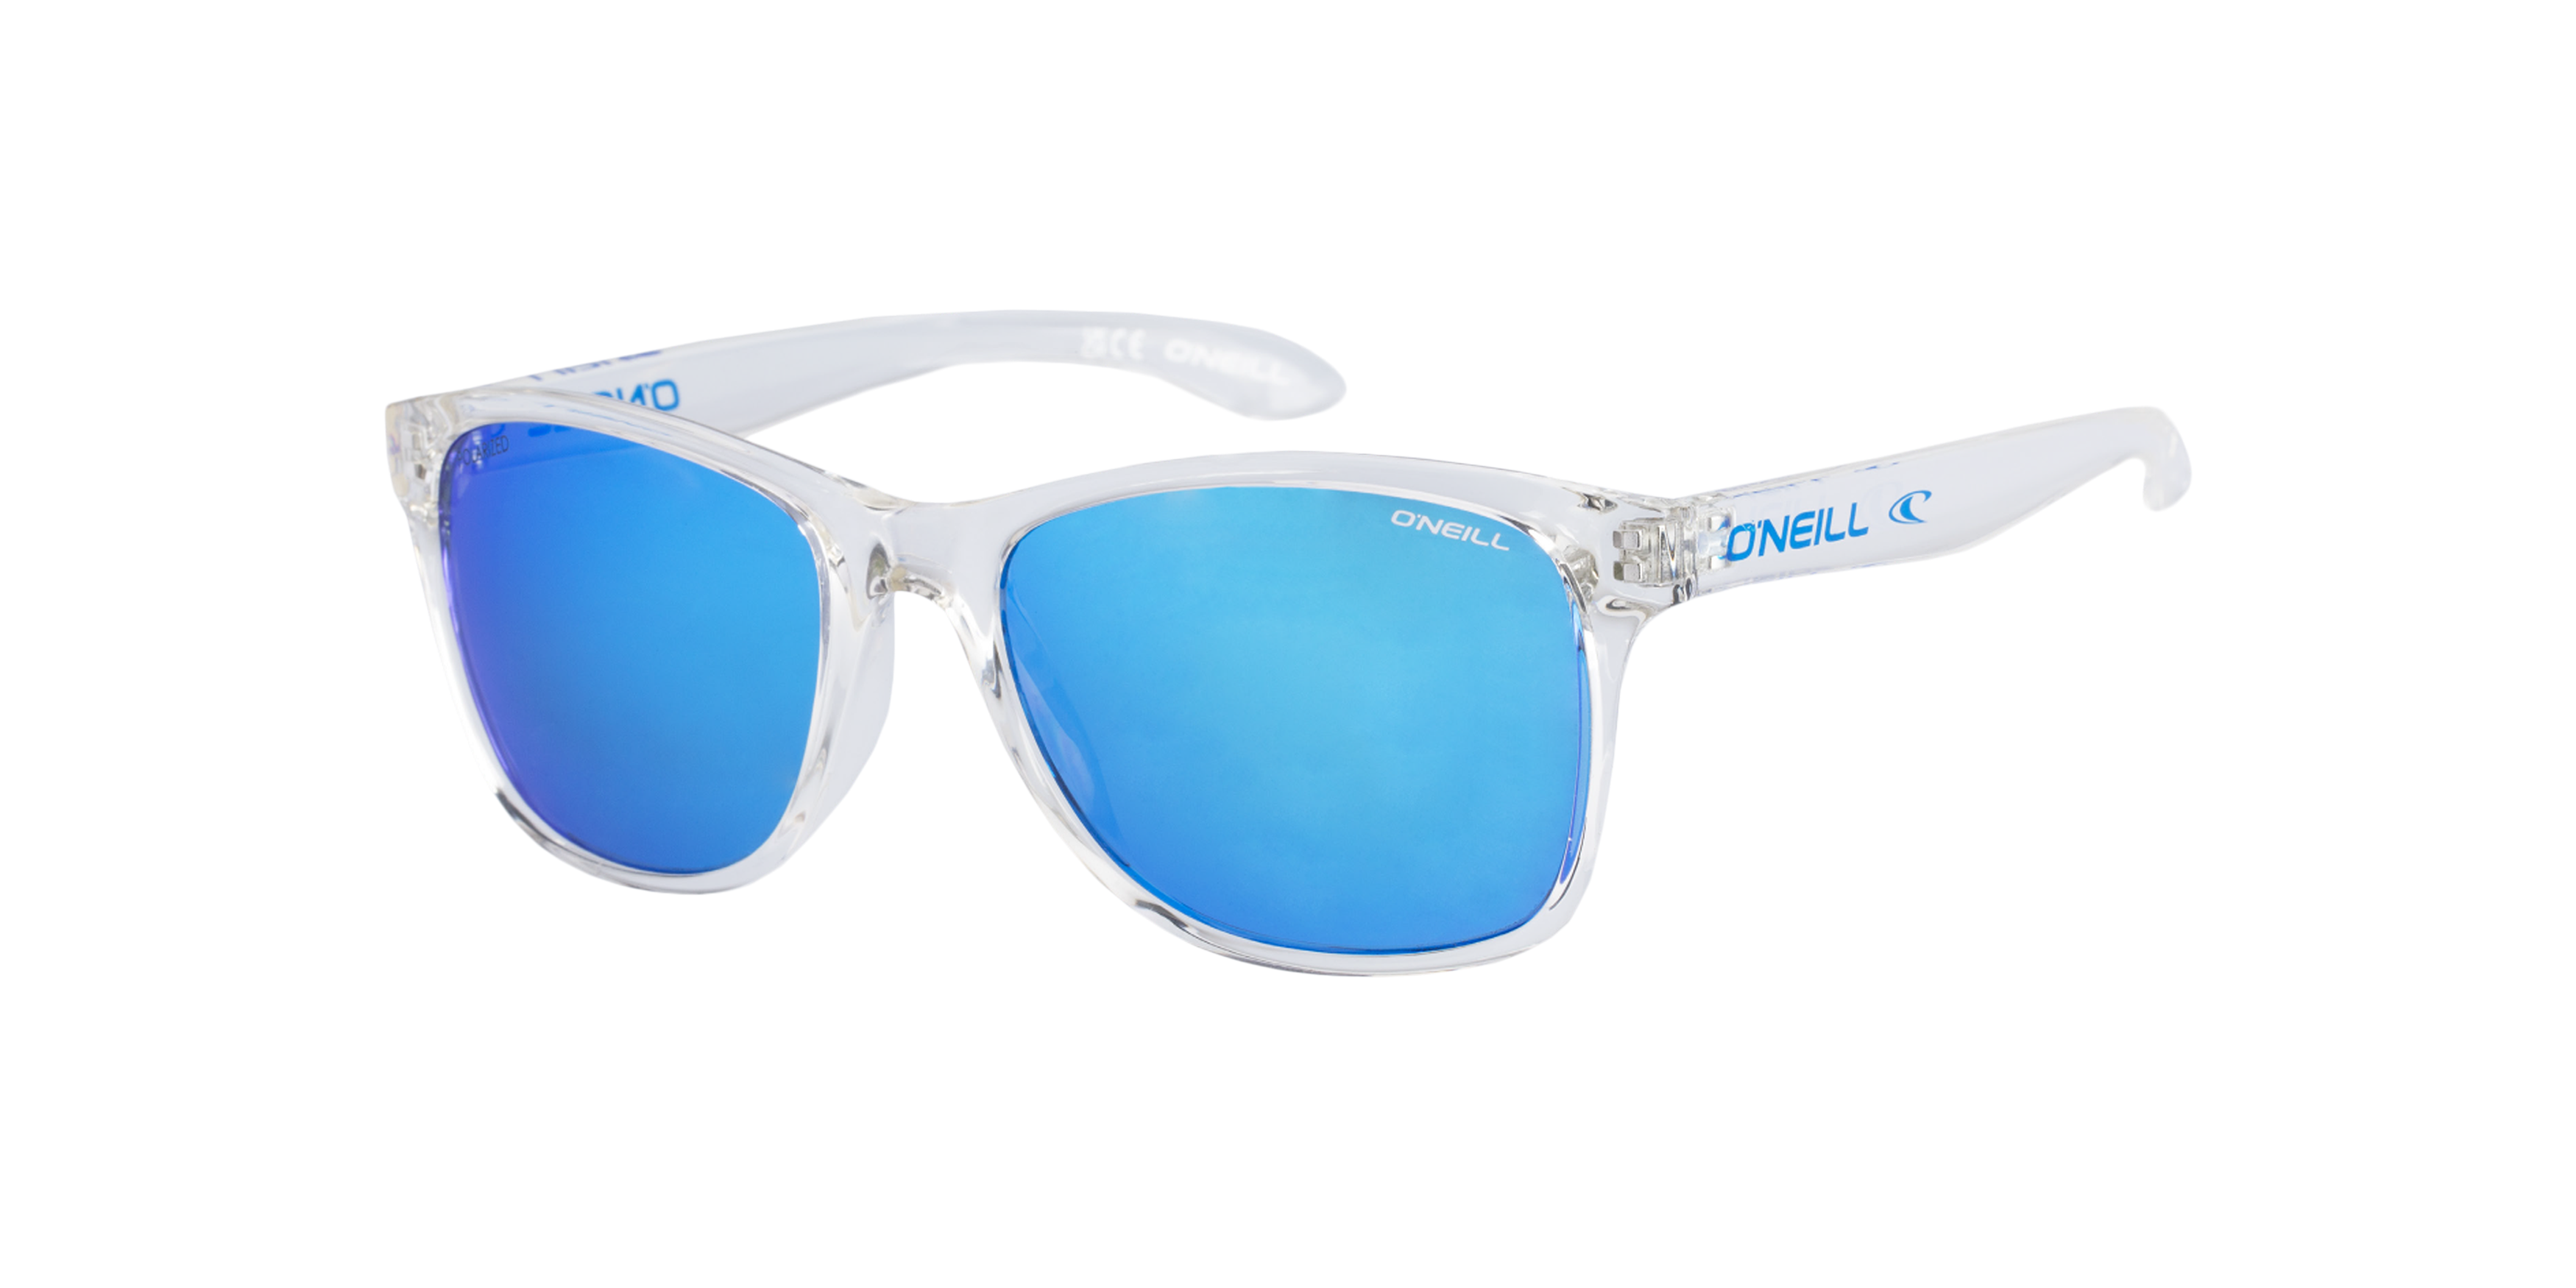 Angle_Left01 O'Neill Offshore 2.0 (113P) Sunglasses Blue / Transparent, Clear